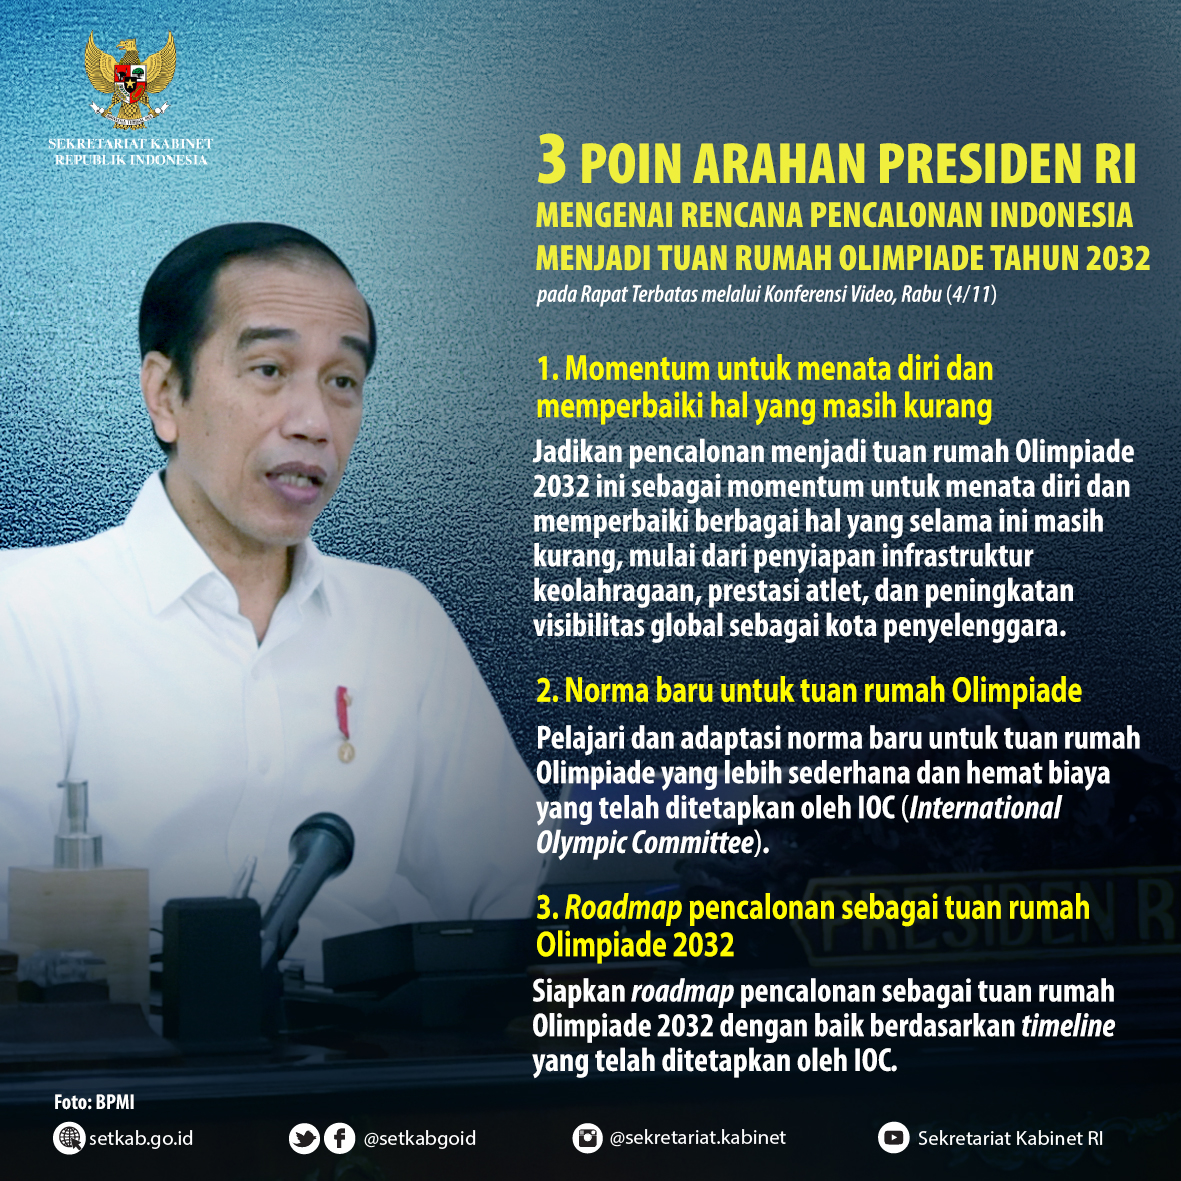 Arahan Presiden Joko Widodo pada Rapat Terbatas "Rencana Pencalonan Indonesia Menjadi Tuan Rumah Olimpiade Tahun 2032", Rabu (4/11)